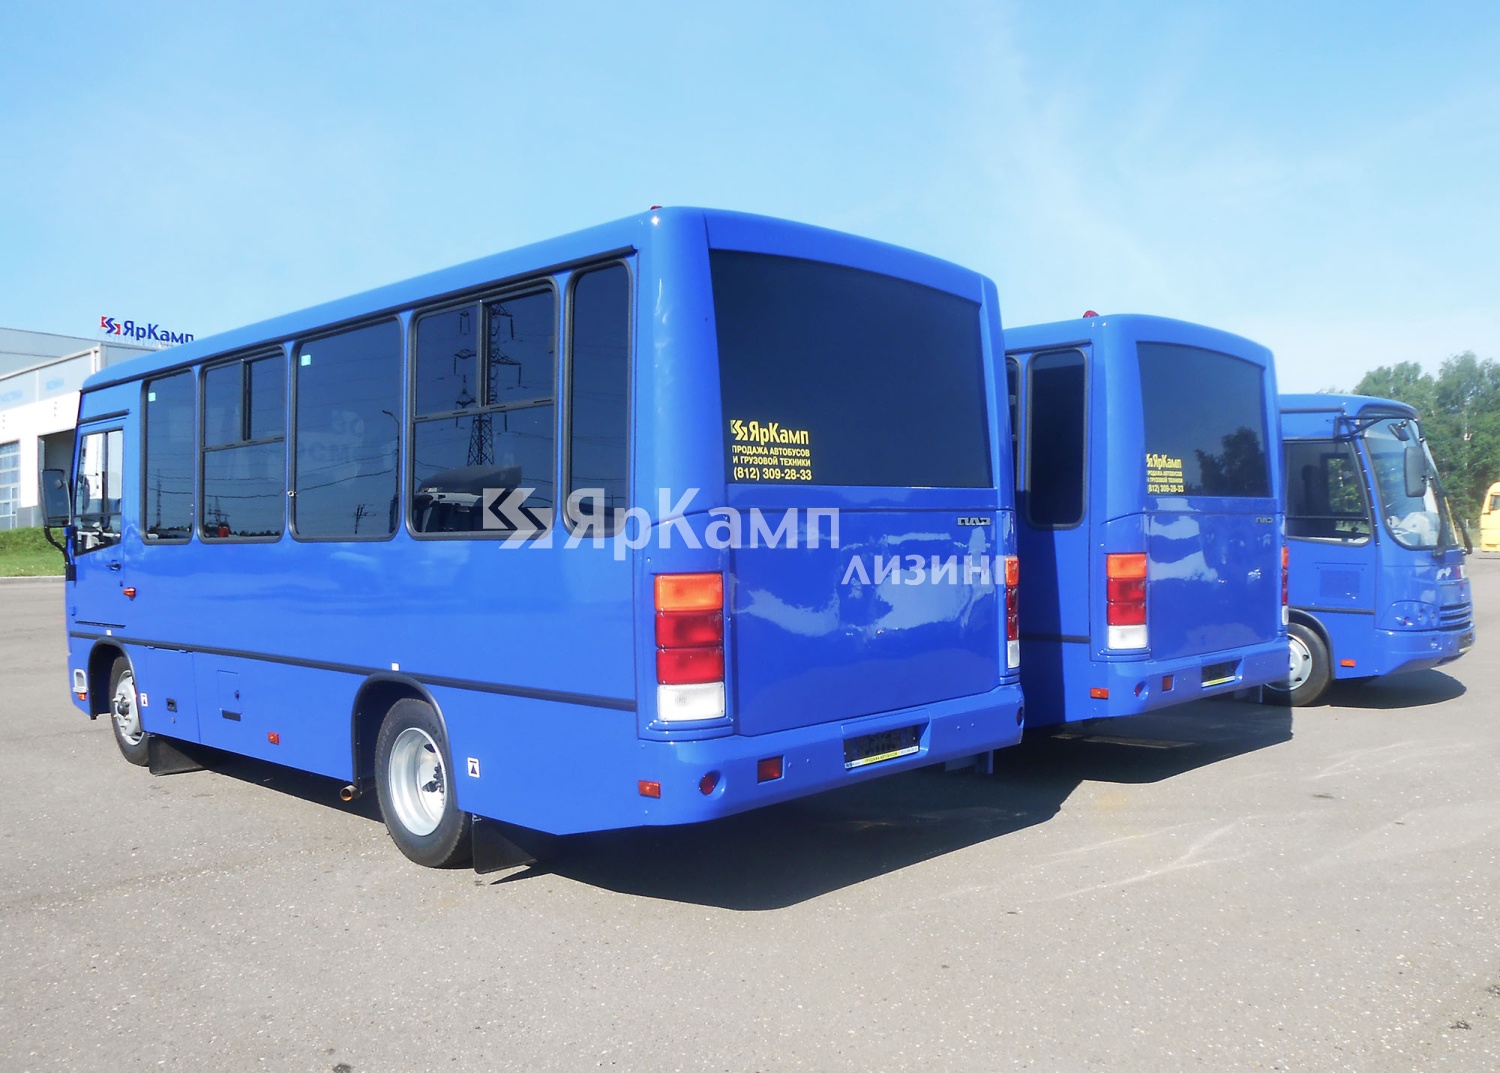 "ЯрКамп-Лизинг" произвел передачу на условиях лизинга автобусов ПАЗ 320302-08